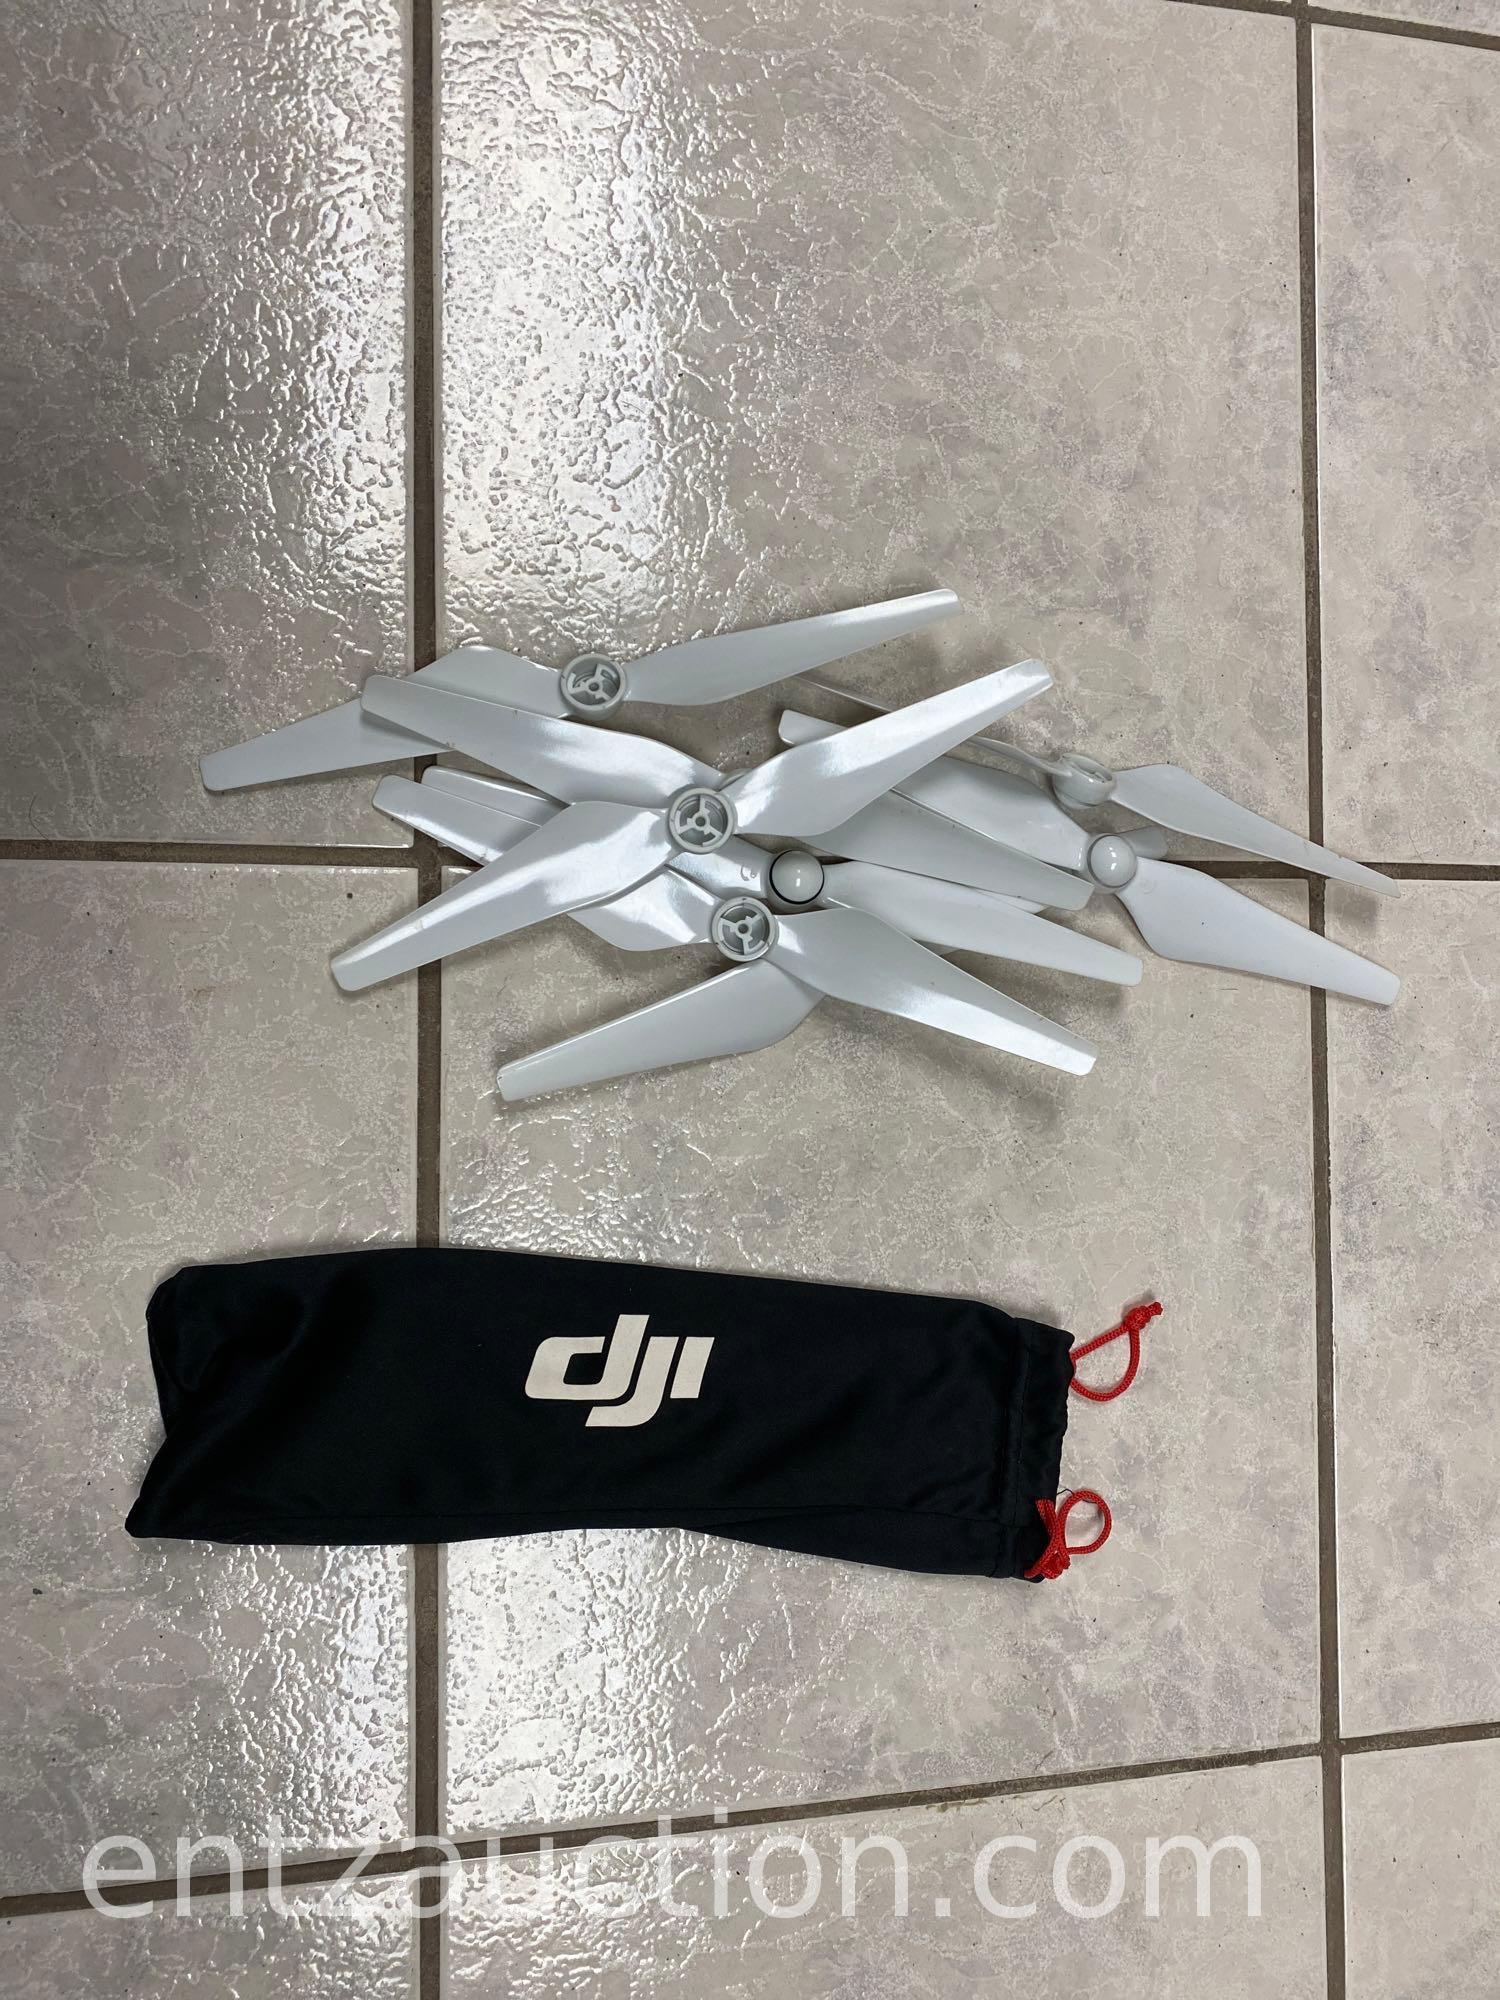 DJI PHANTOM 4 DRONE, CONTROLLER AND CARRYING